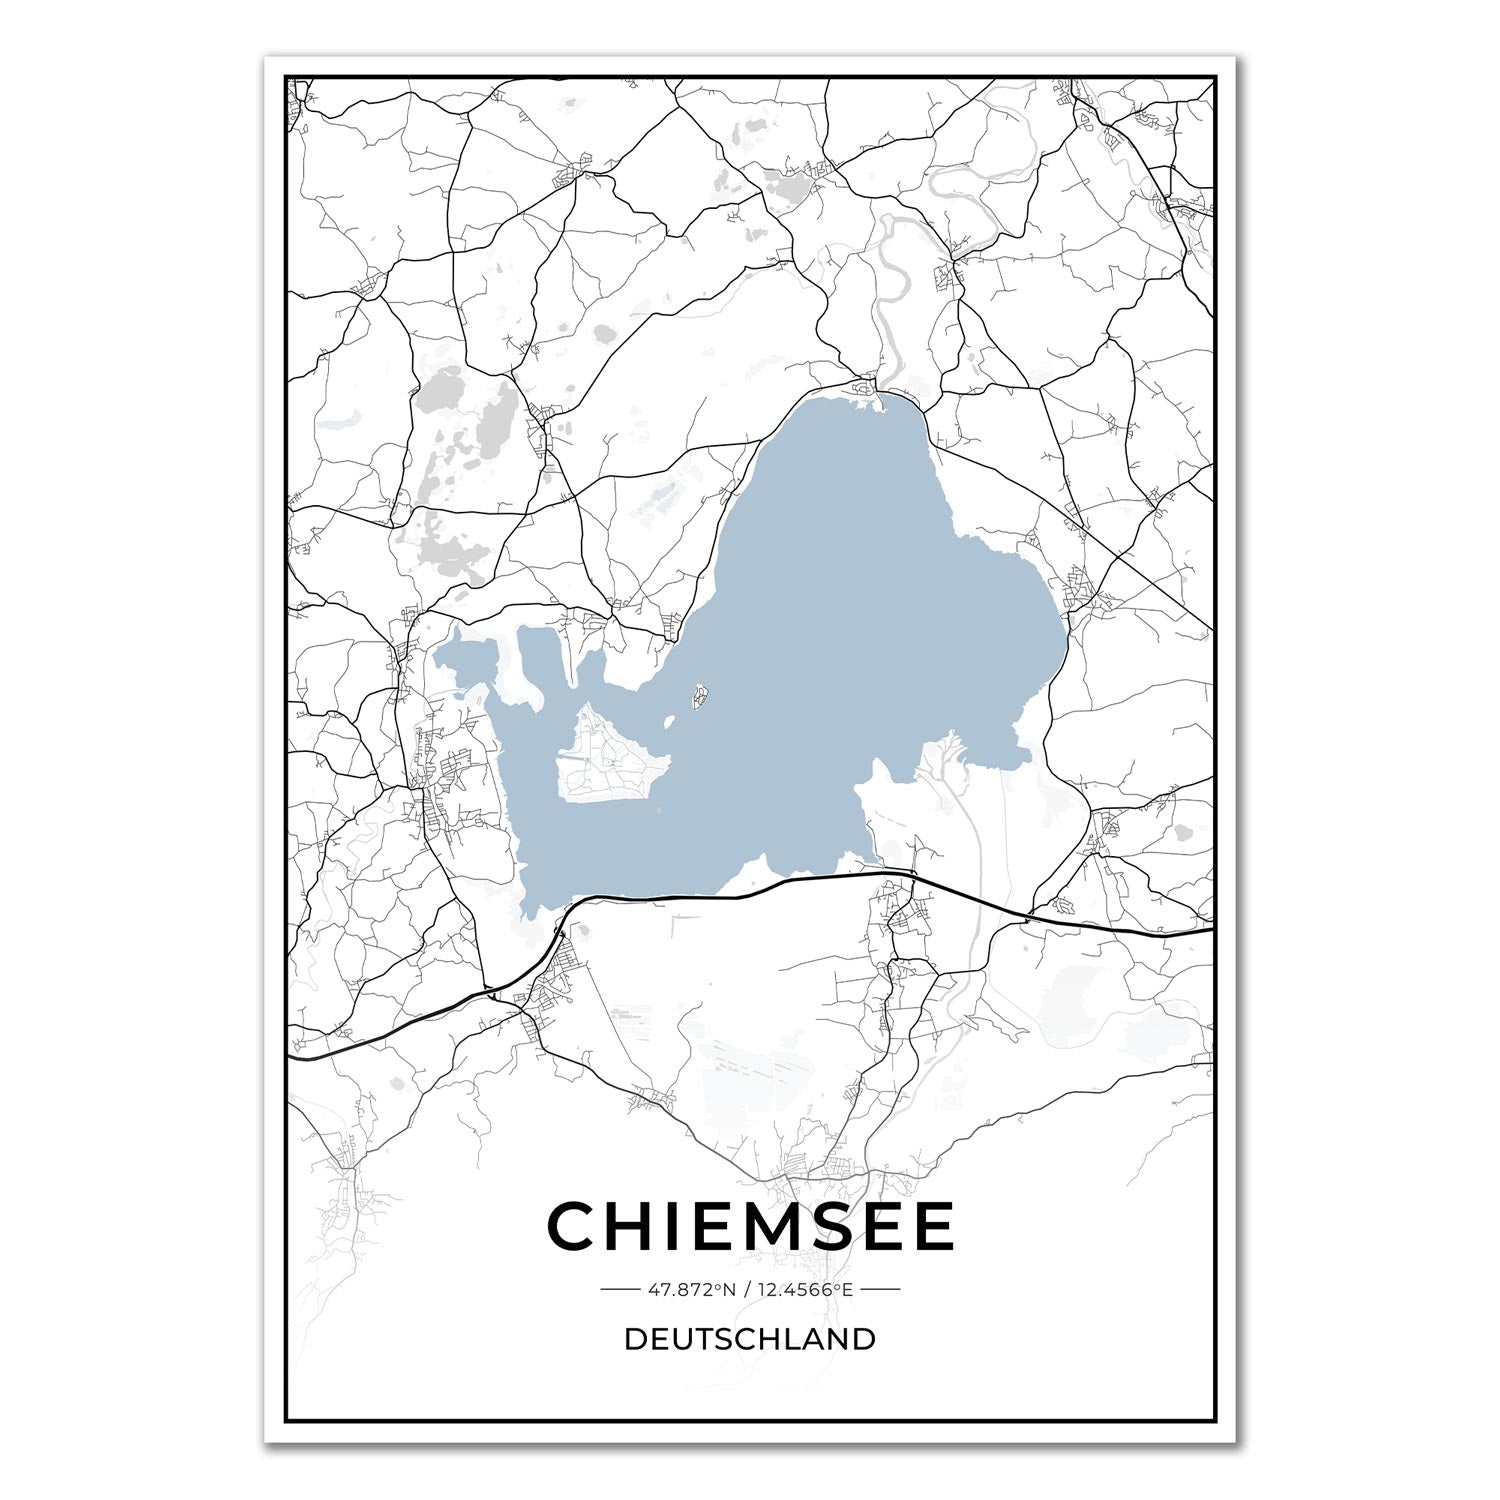 See Karten Poster - Chiemsee